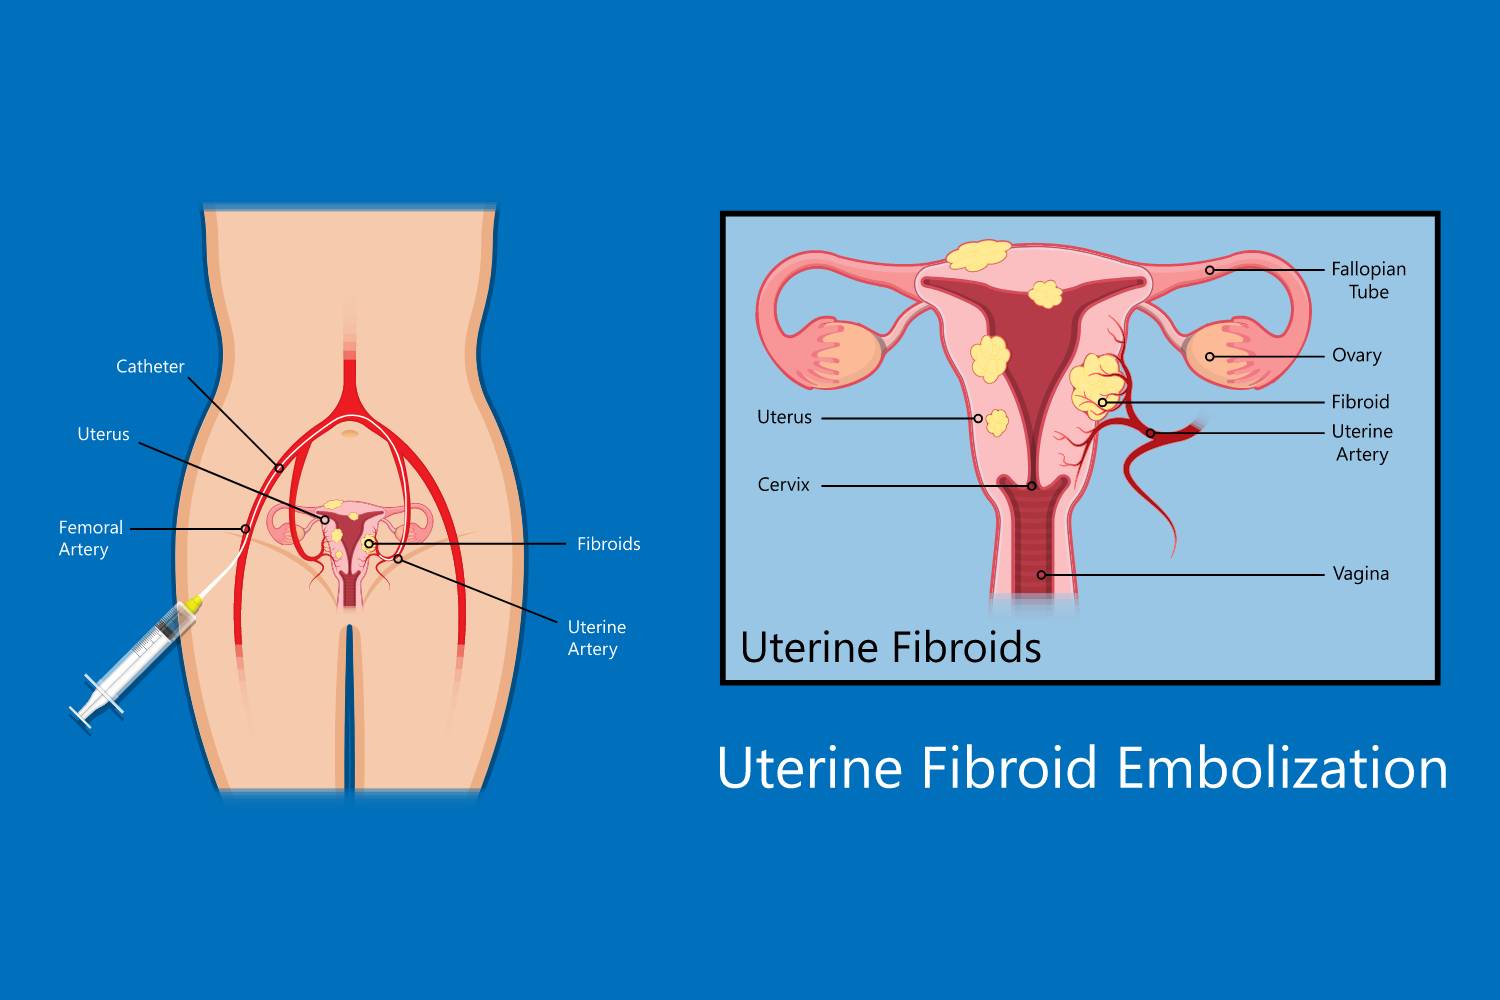 fibroids removal surgery